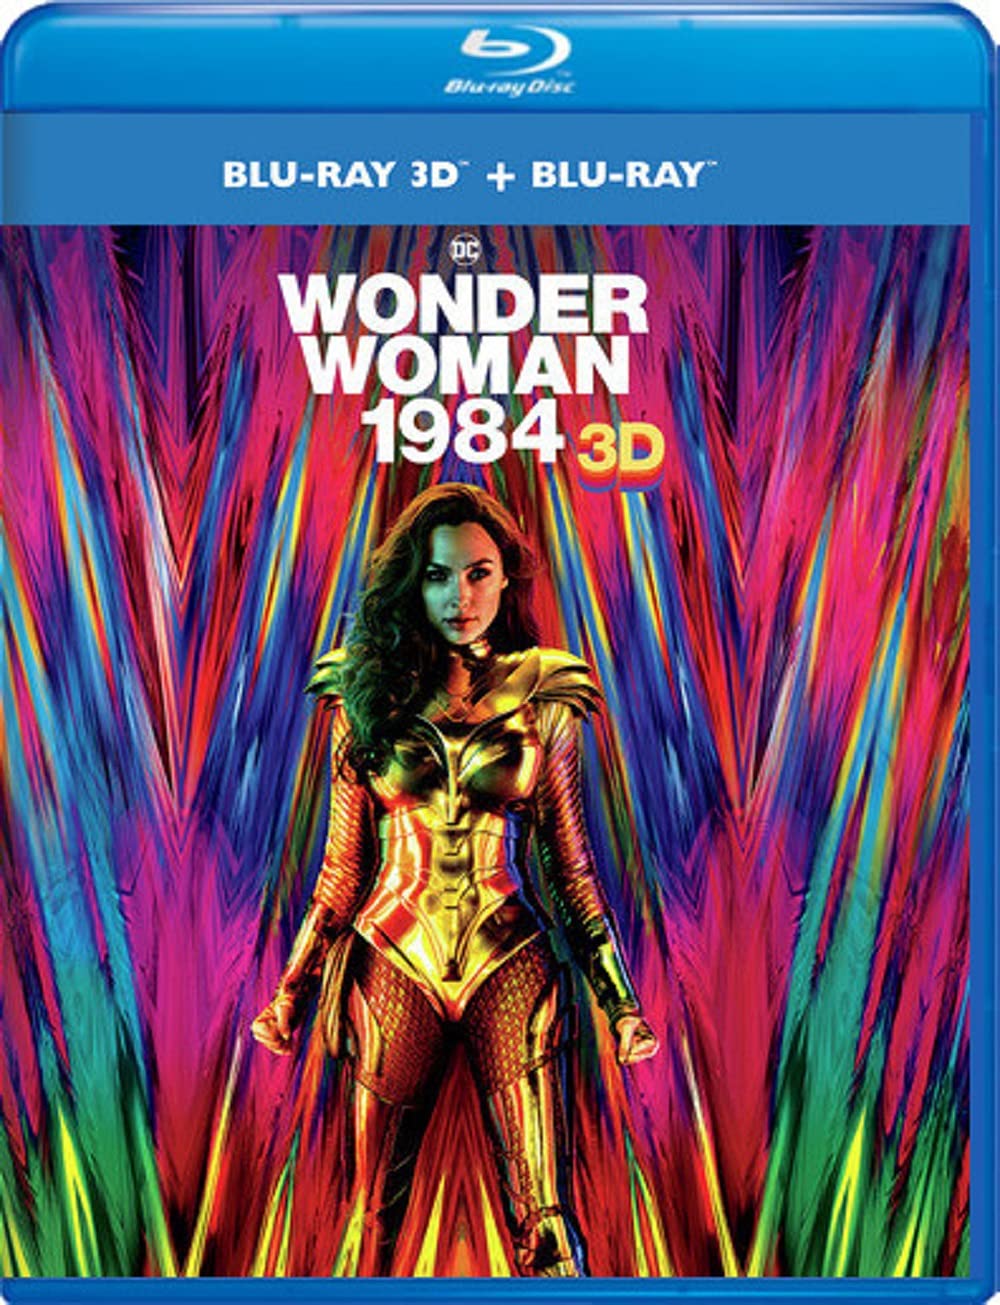 Wonder Woman 1984 (3D Blu-ray + Blu-ray) $6.99 @ Amazon